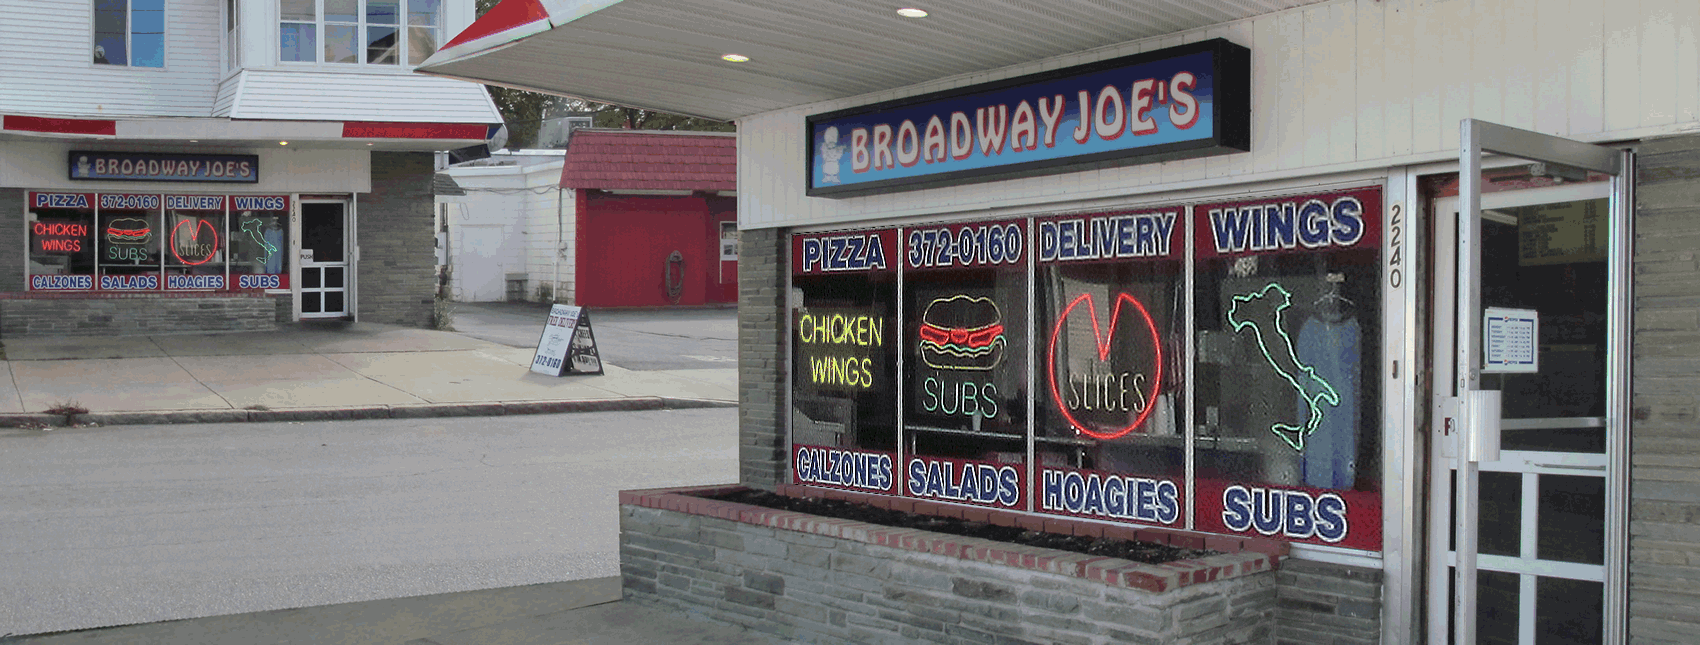 Broadway Joe's Storefront